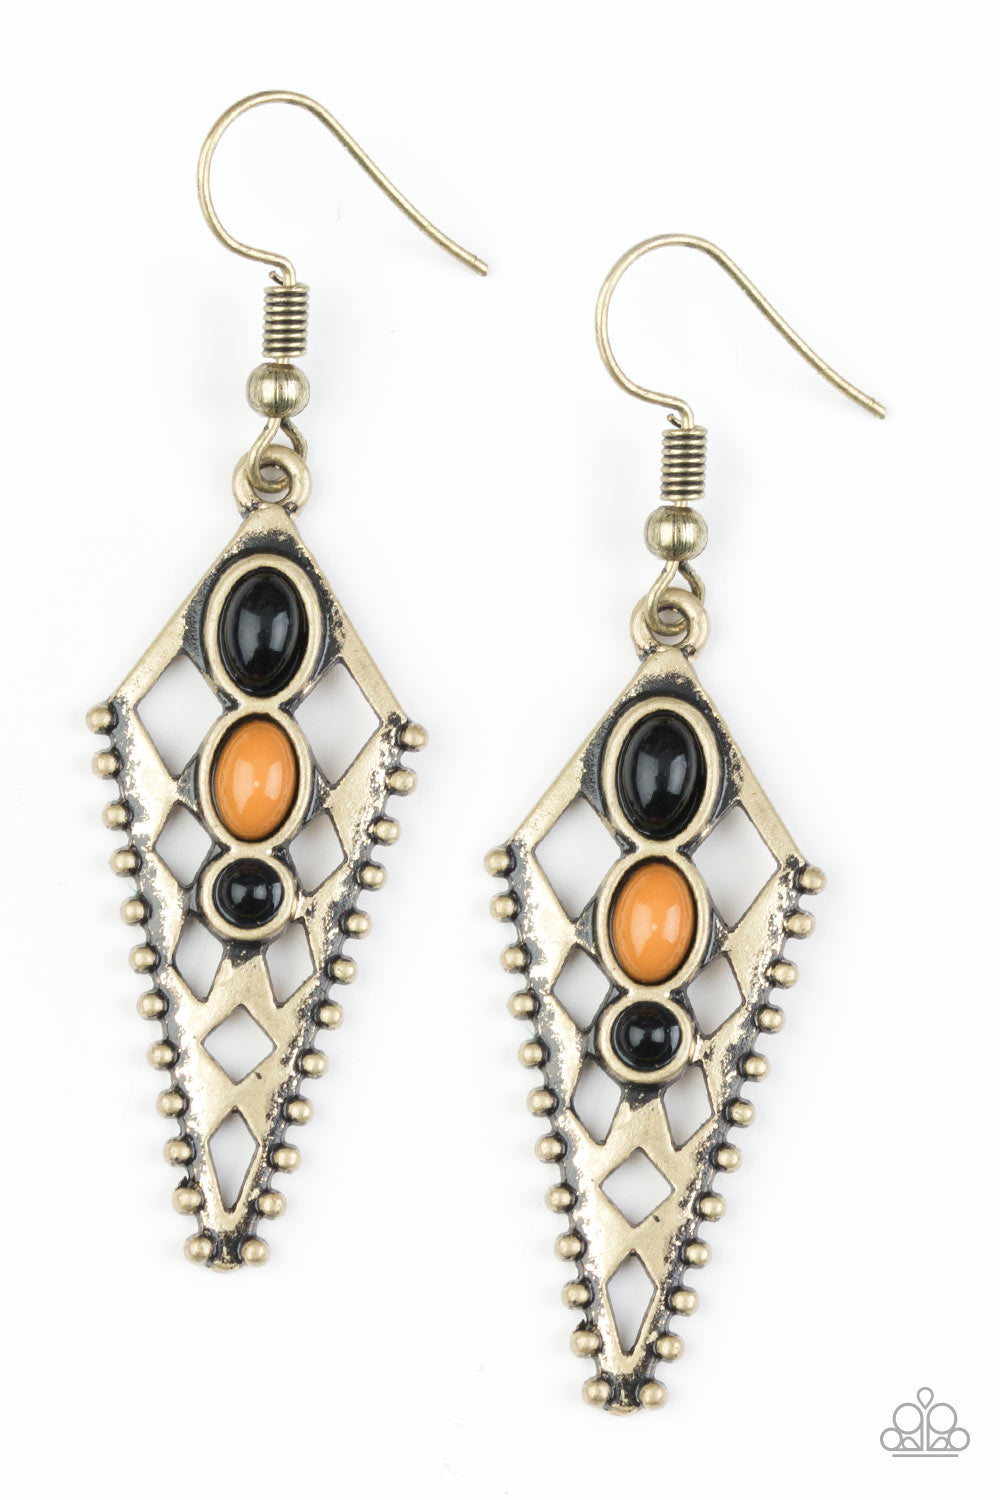 Paparazzi Terra Territory - Brass - Meerkat Beads - Ornate Triangular Tribal Earrings - $5 Jewelry With Ashley Swint